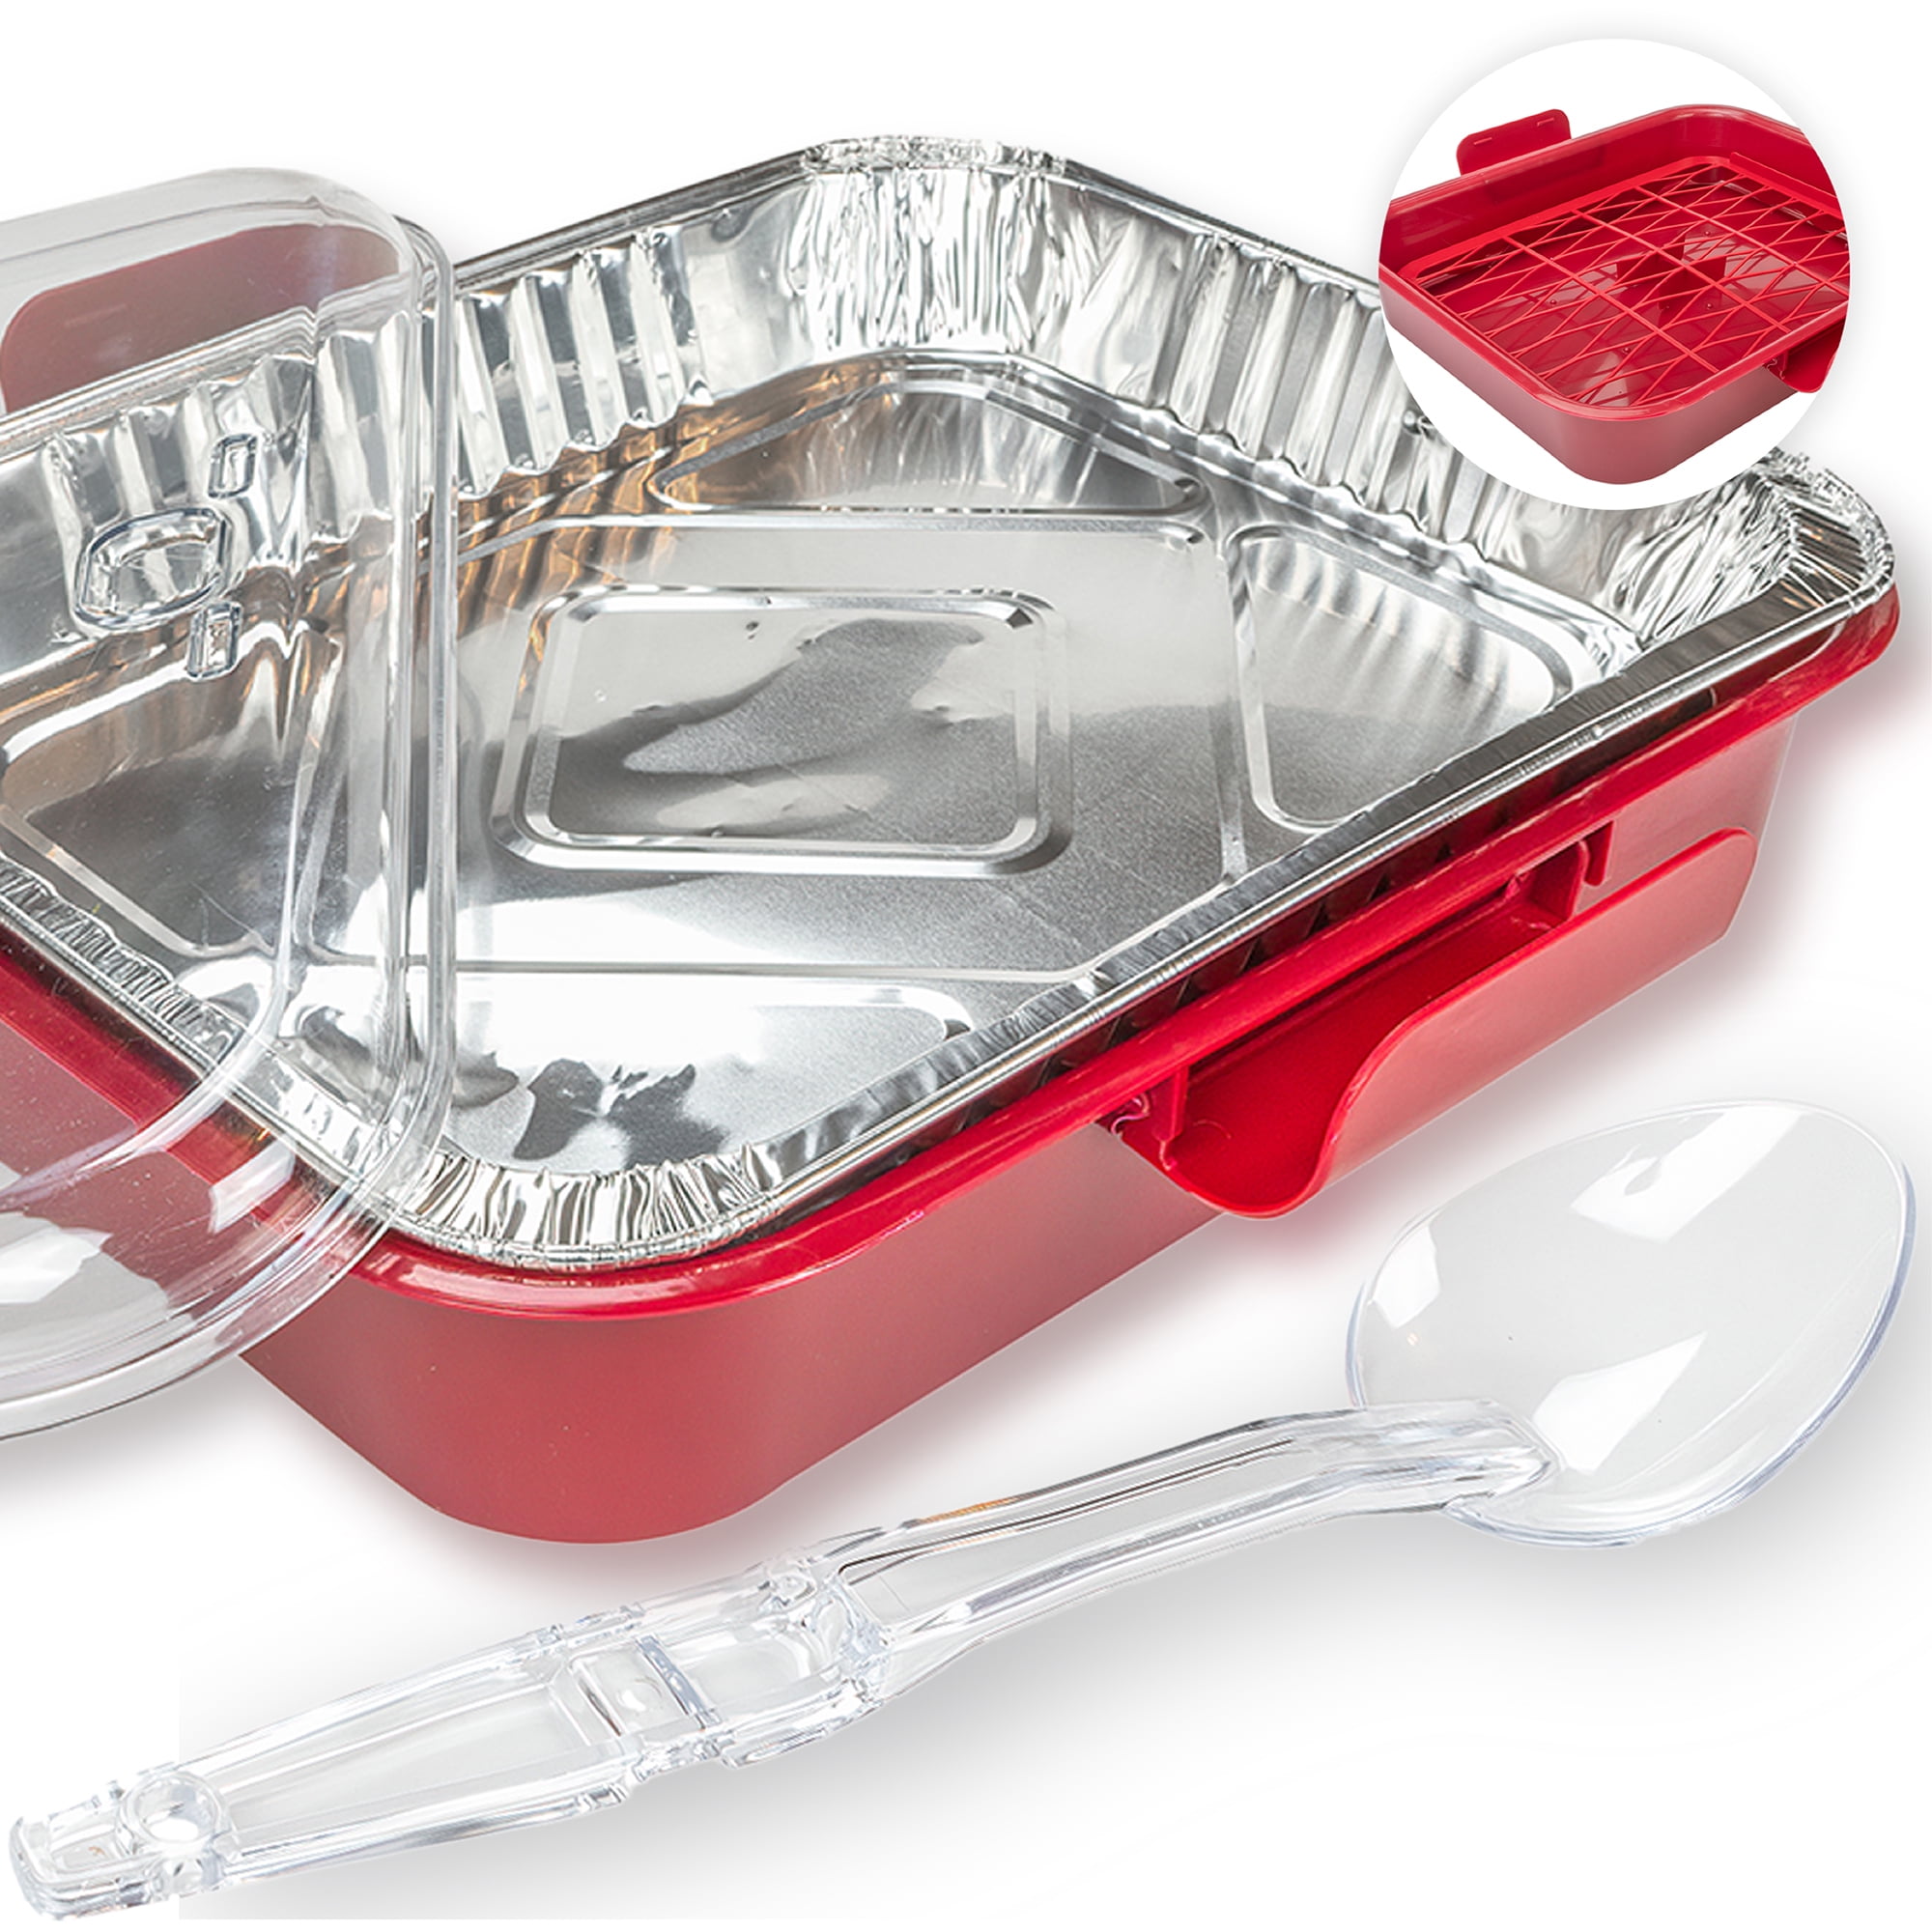 Aluminum Foil Carrier With Lid And Serving Spoon, Aluminum Foil Casserole  Pans, Stackable Foil Pans Holder EXULTIMATE (Red) 